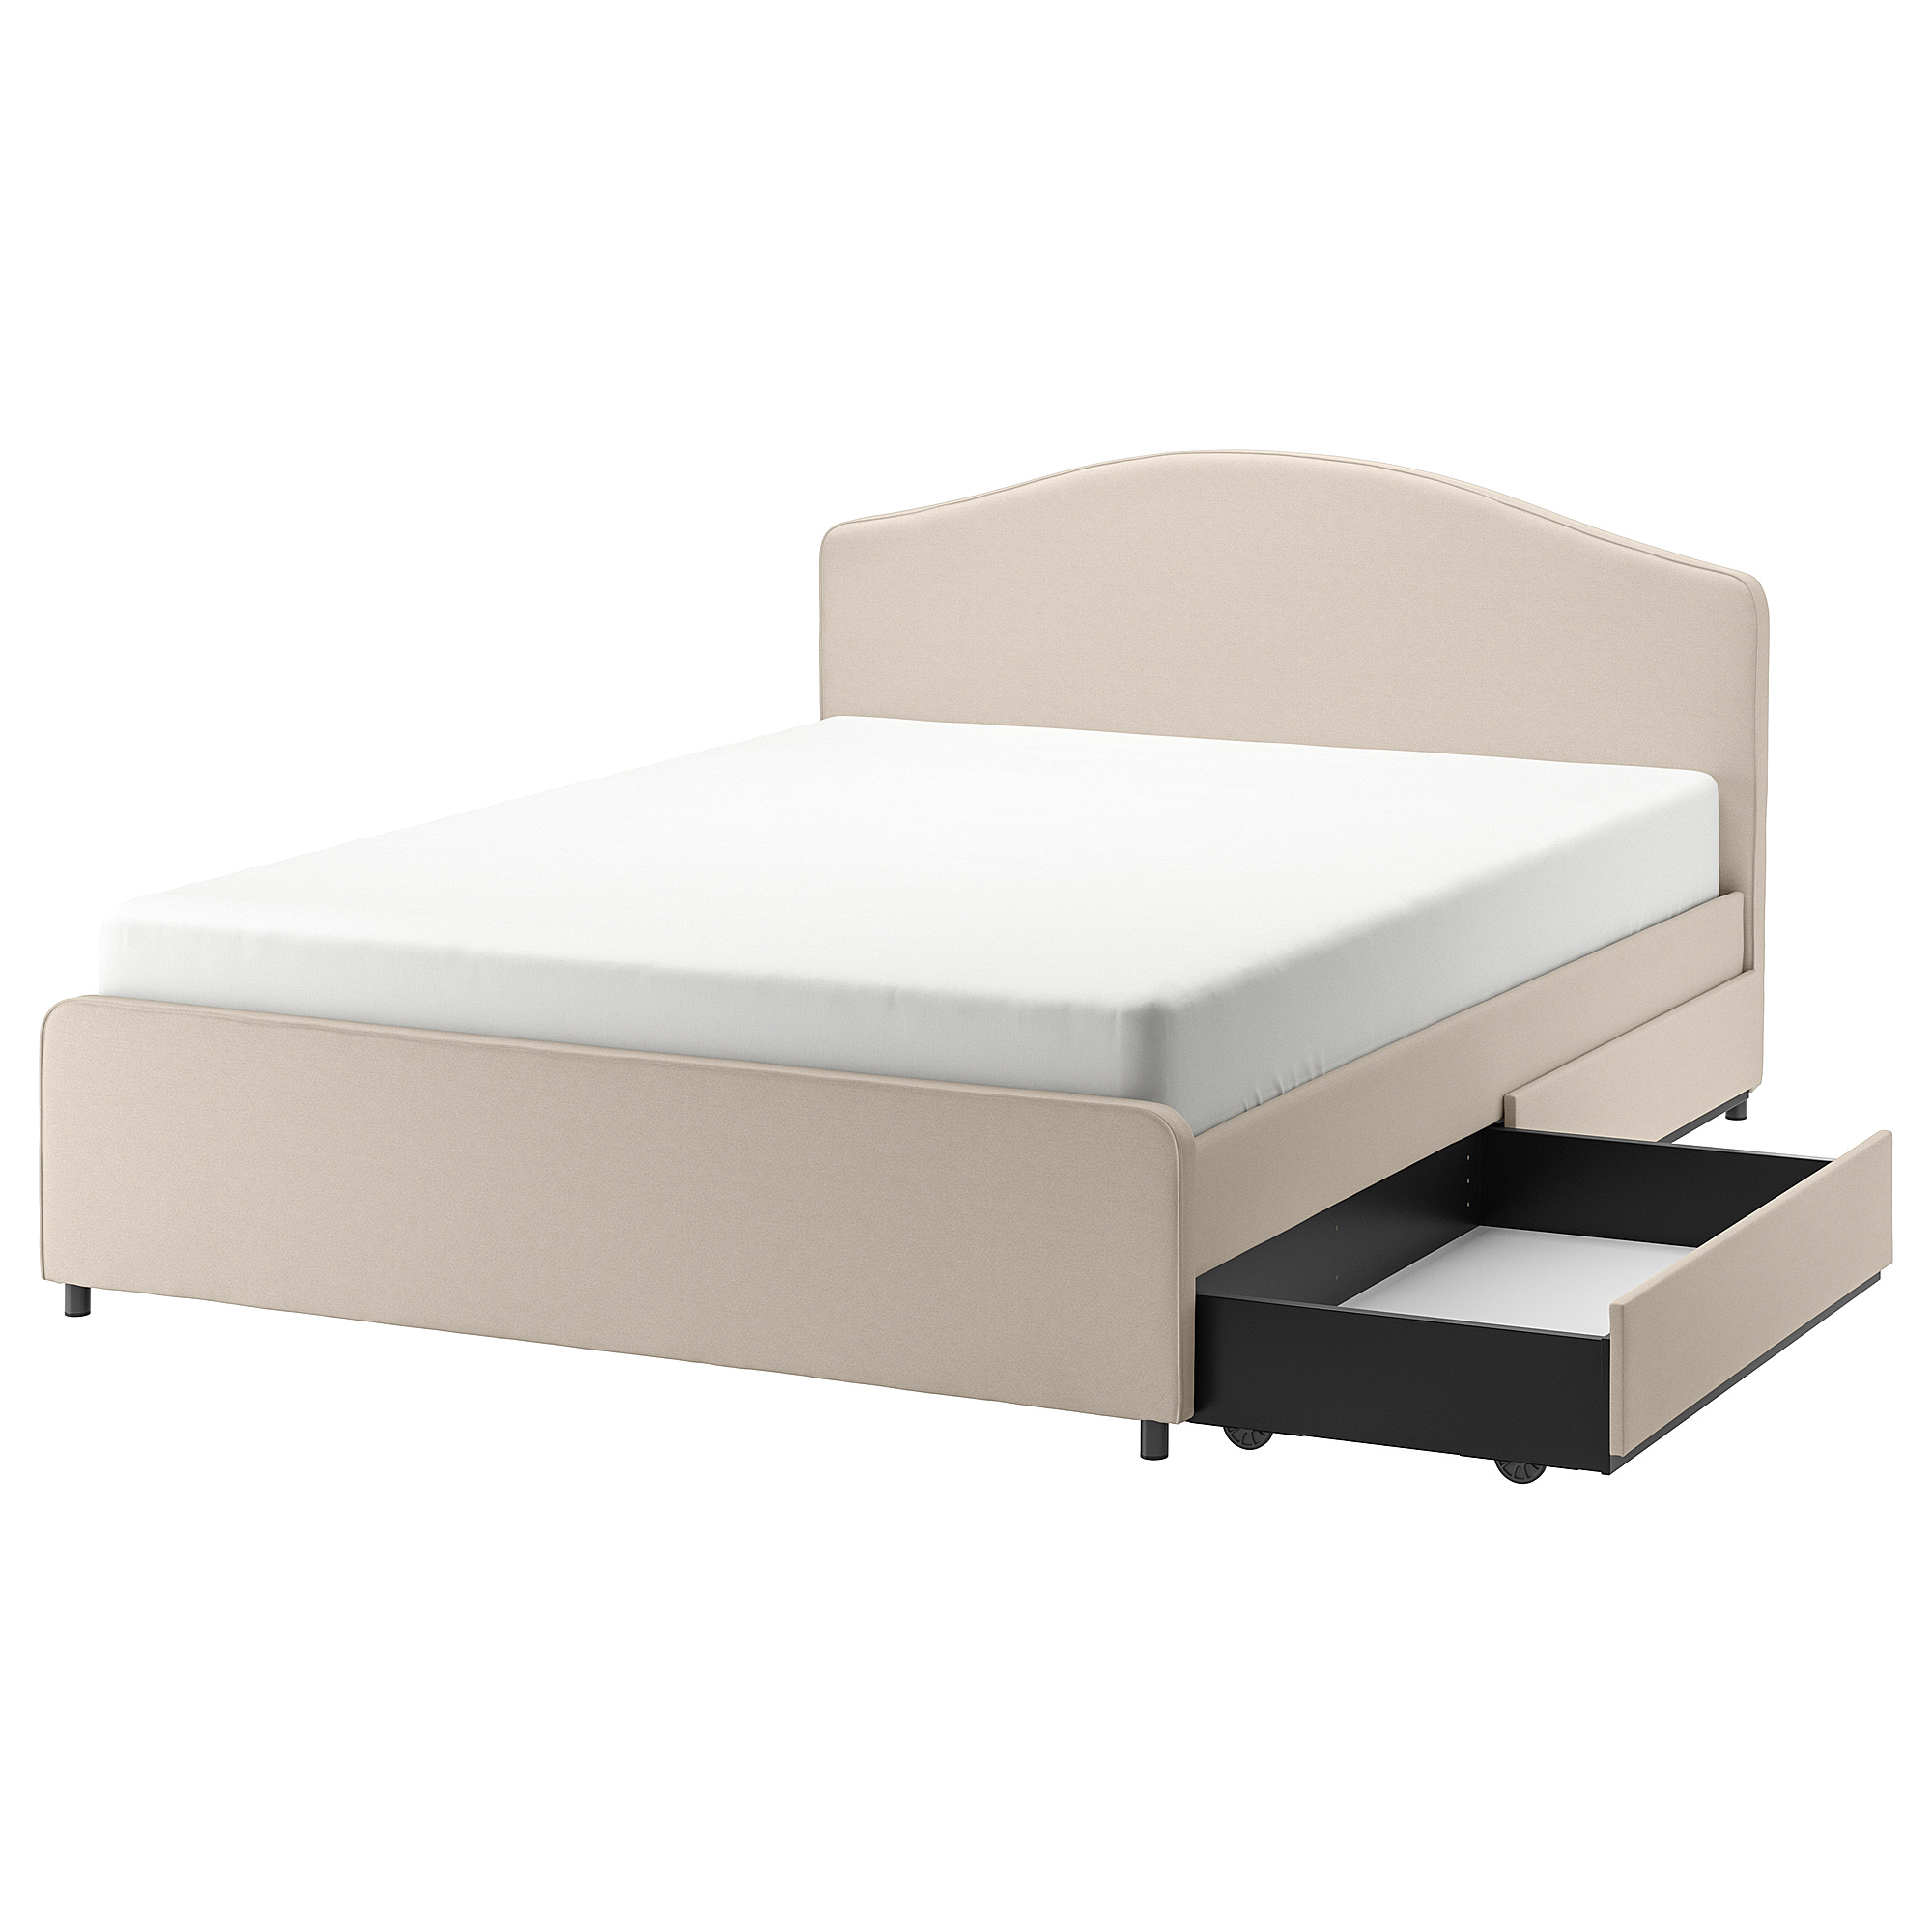 HAUGA upholstered bed, 2 storage boxes